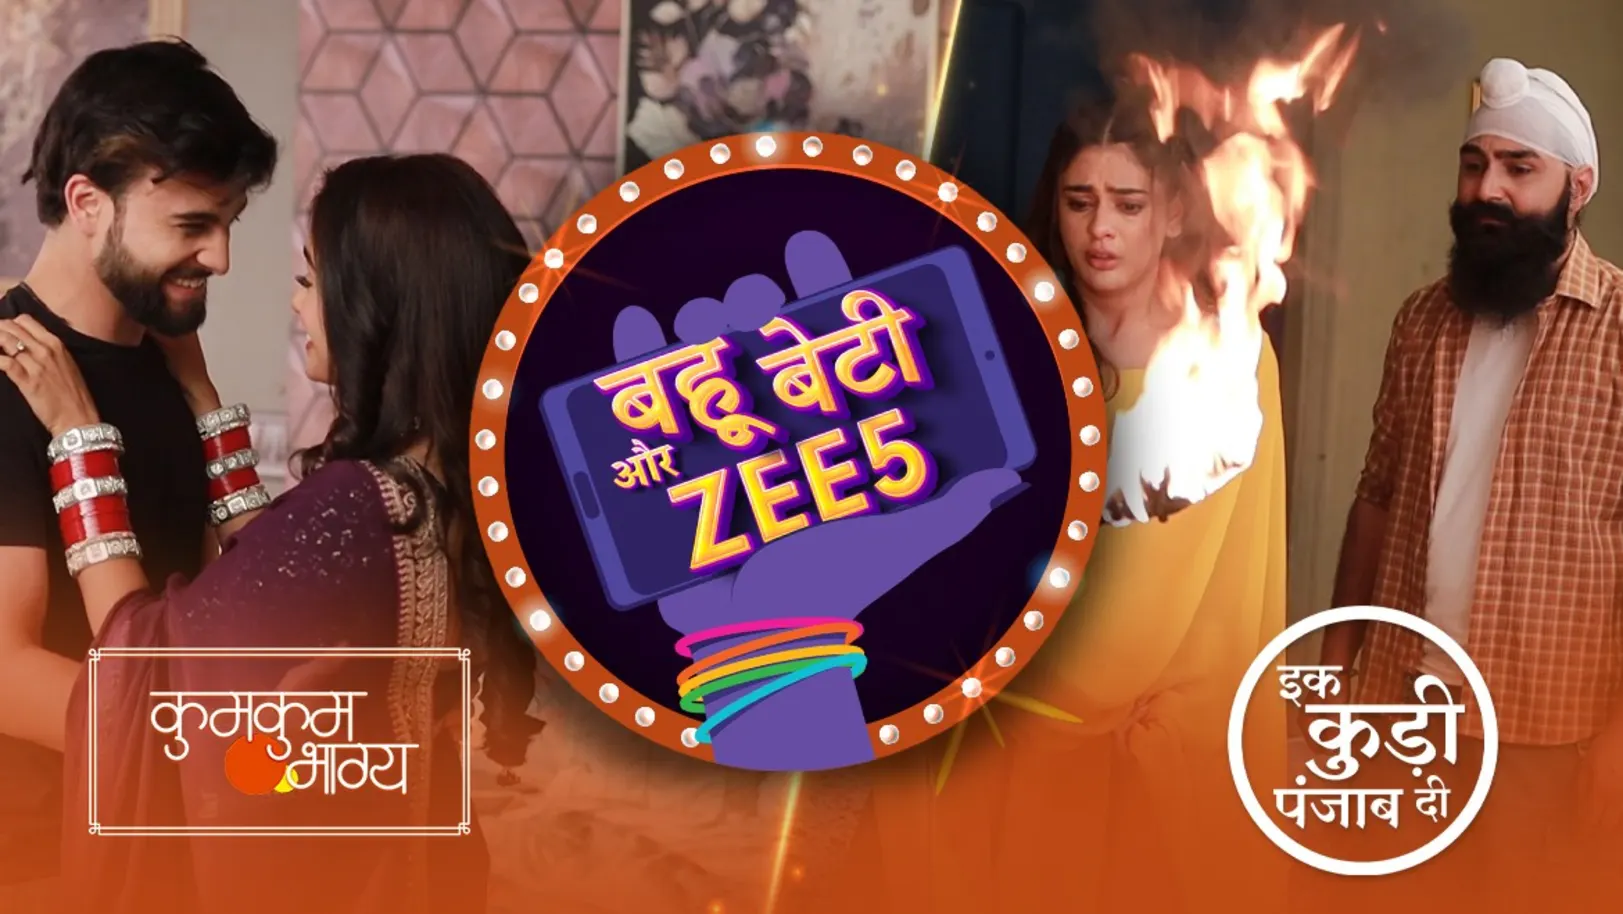 Interesting Dramatic Scenes Are Shot | Behind the Scenes | Bahu Beti Aur ZEE5 Episode 5